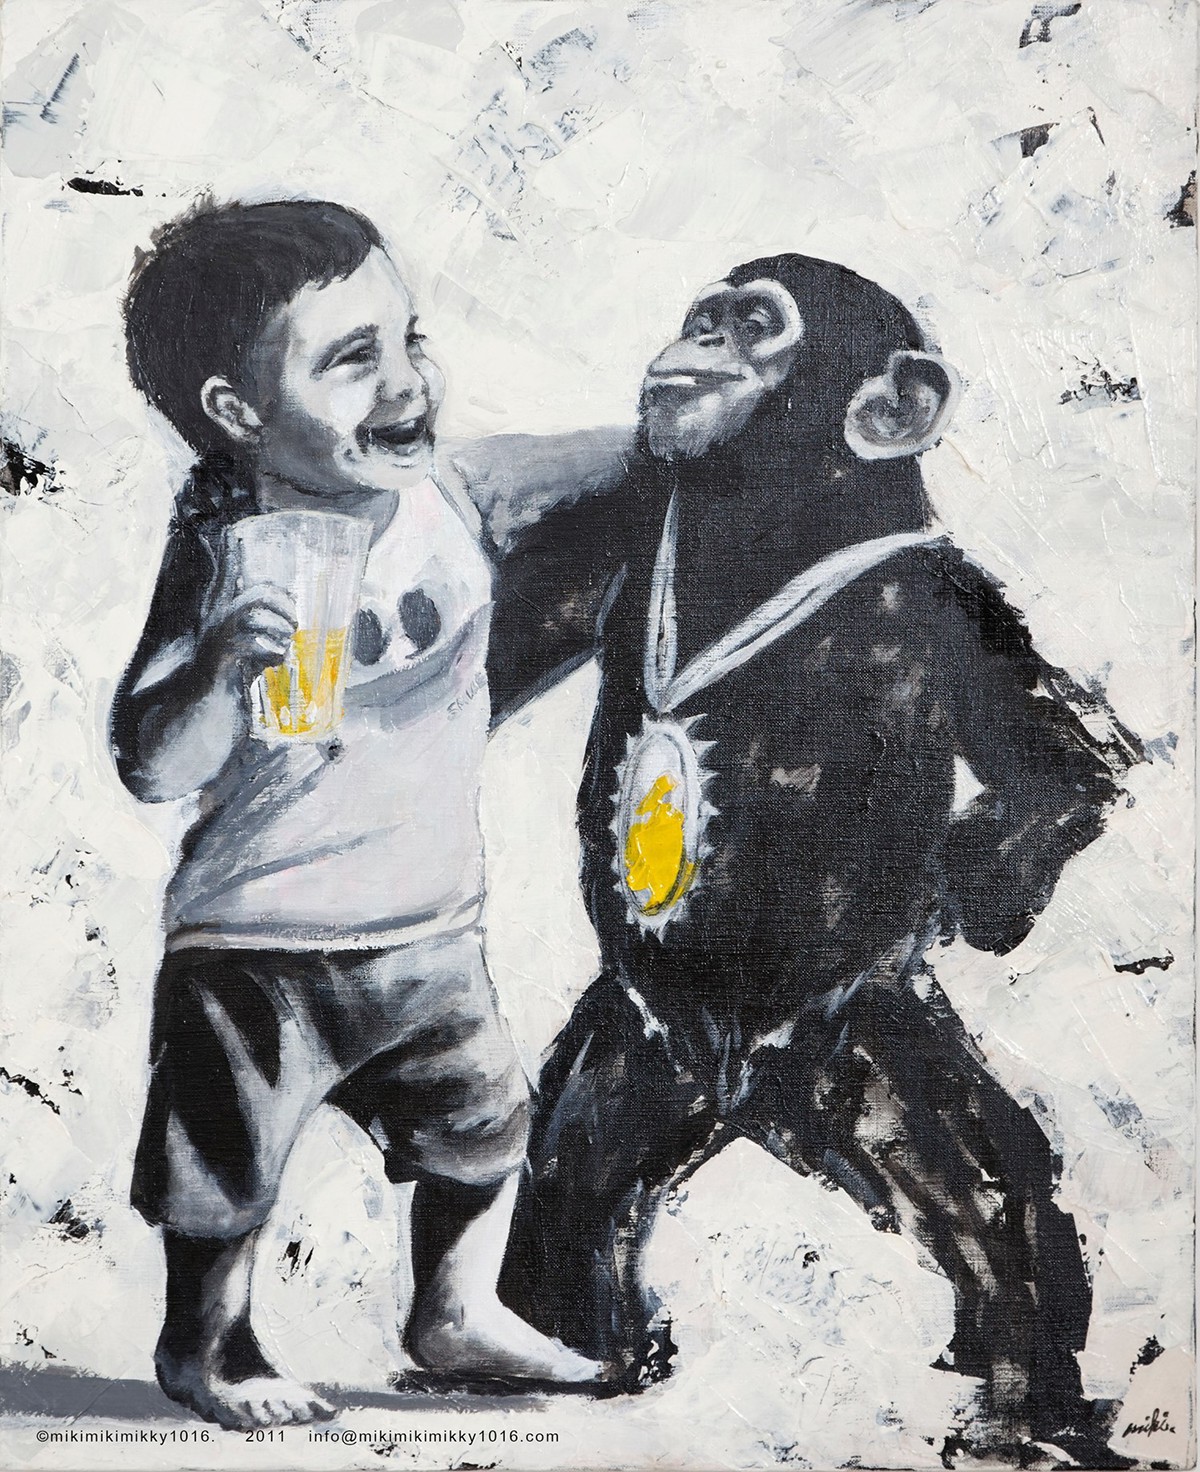 art chimpanzee Love boy draw cute illustrat friend animal Black&white paint design cool awesome